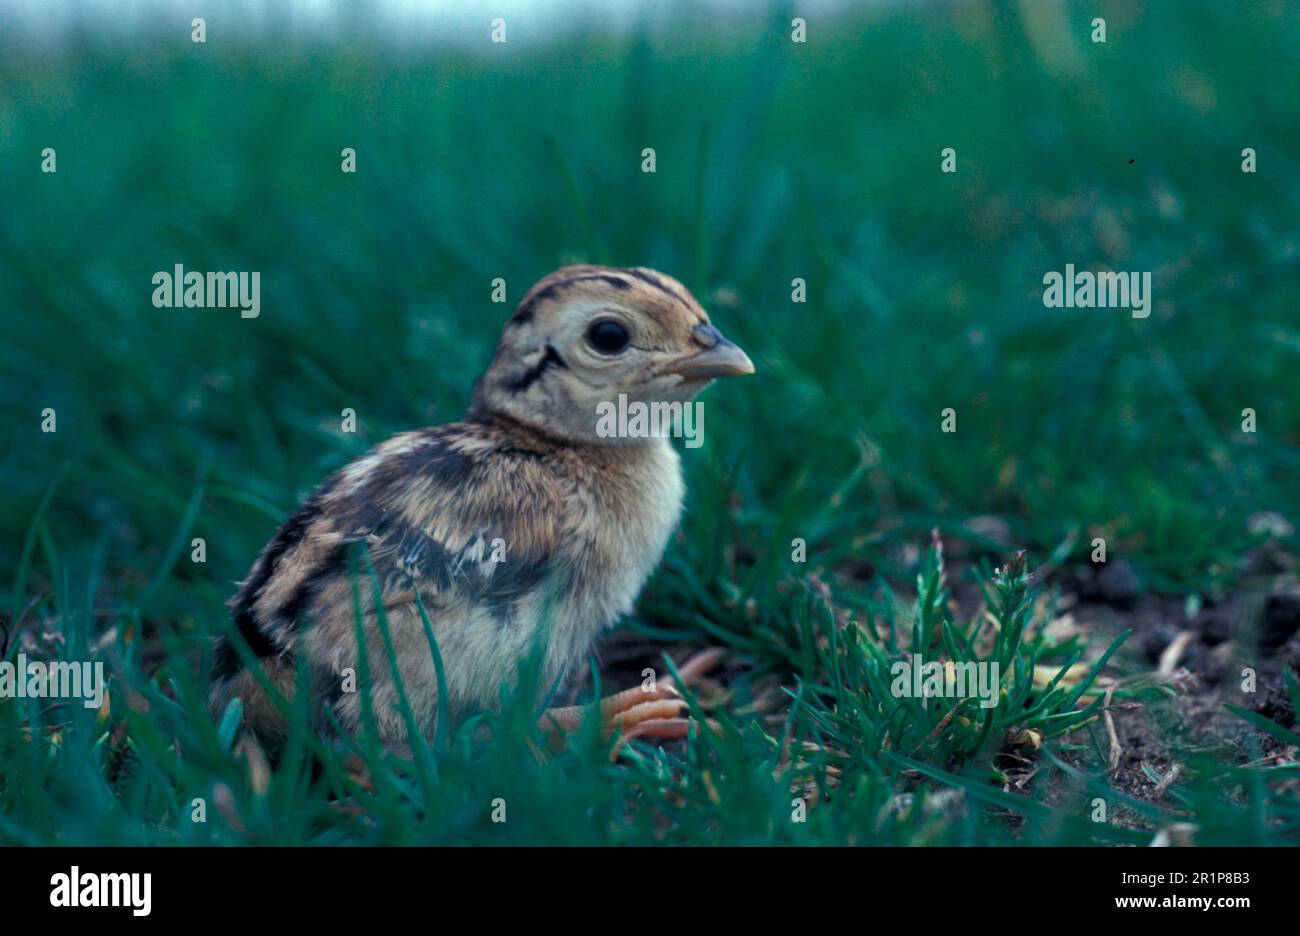 Hunting Pheasant, pheasants (Phasianus colchicus), Pheasant, Chicken Birds, Animals, Birds, Ring-necked Pheasant Chick (S) Stock Photo